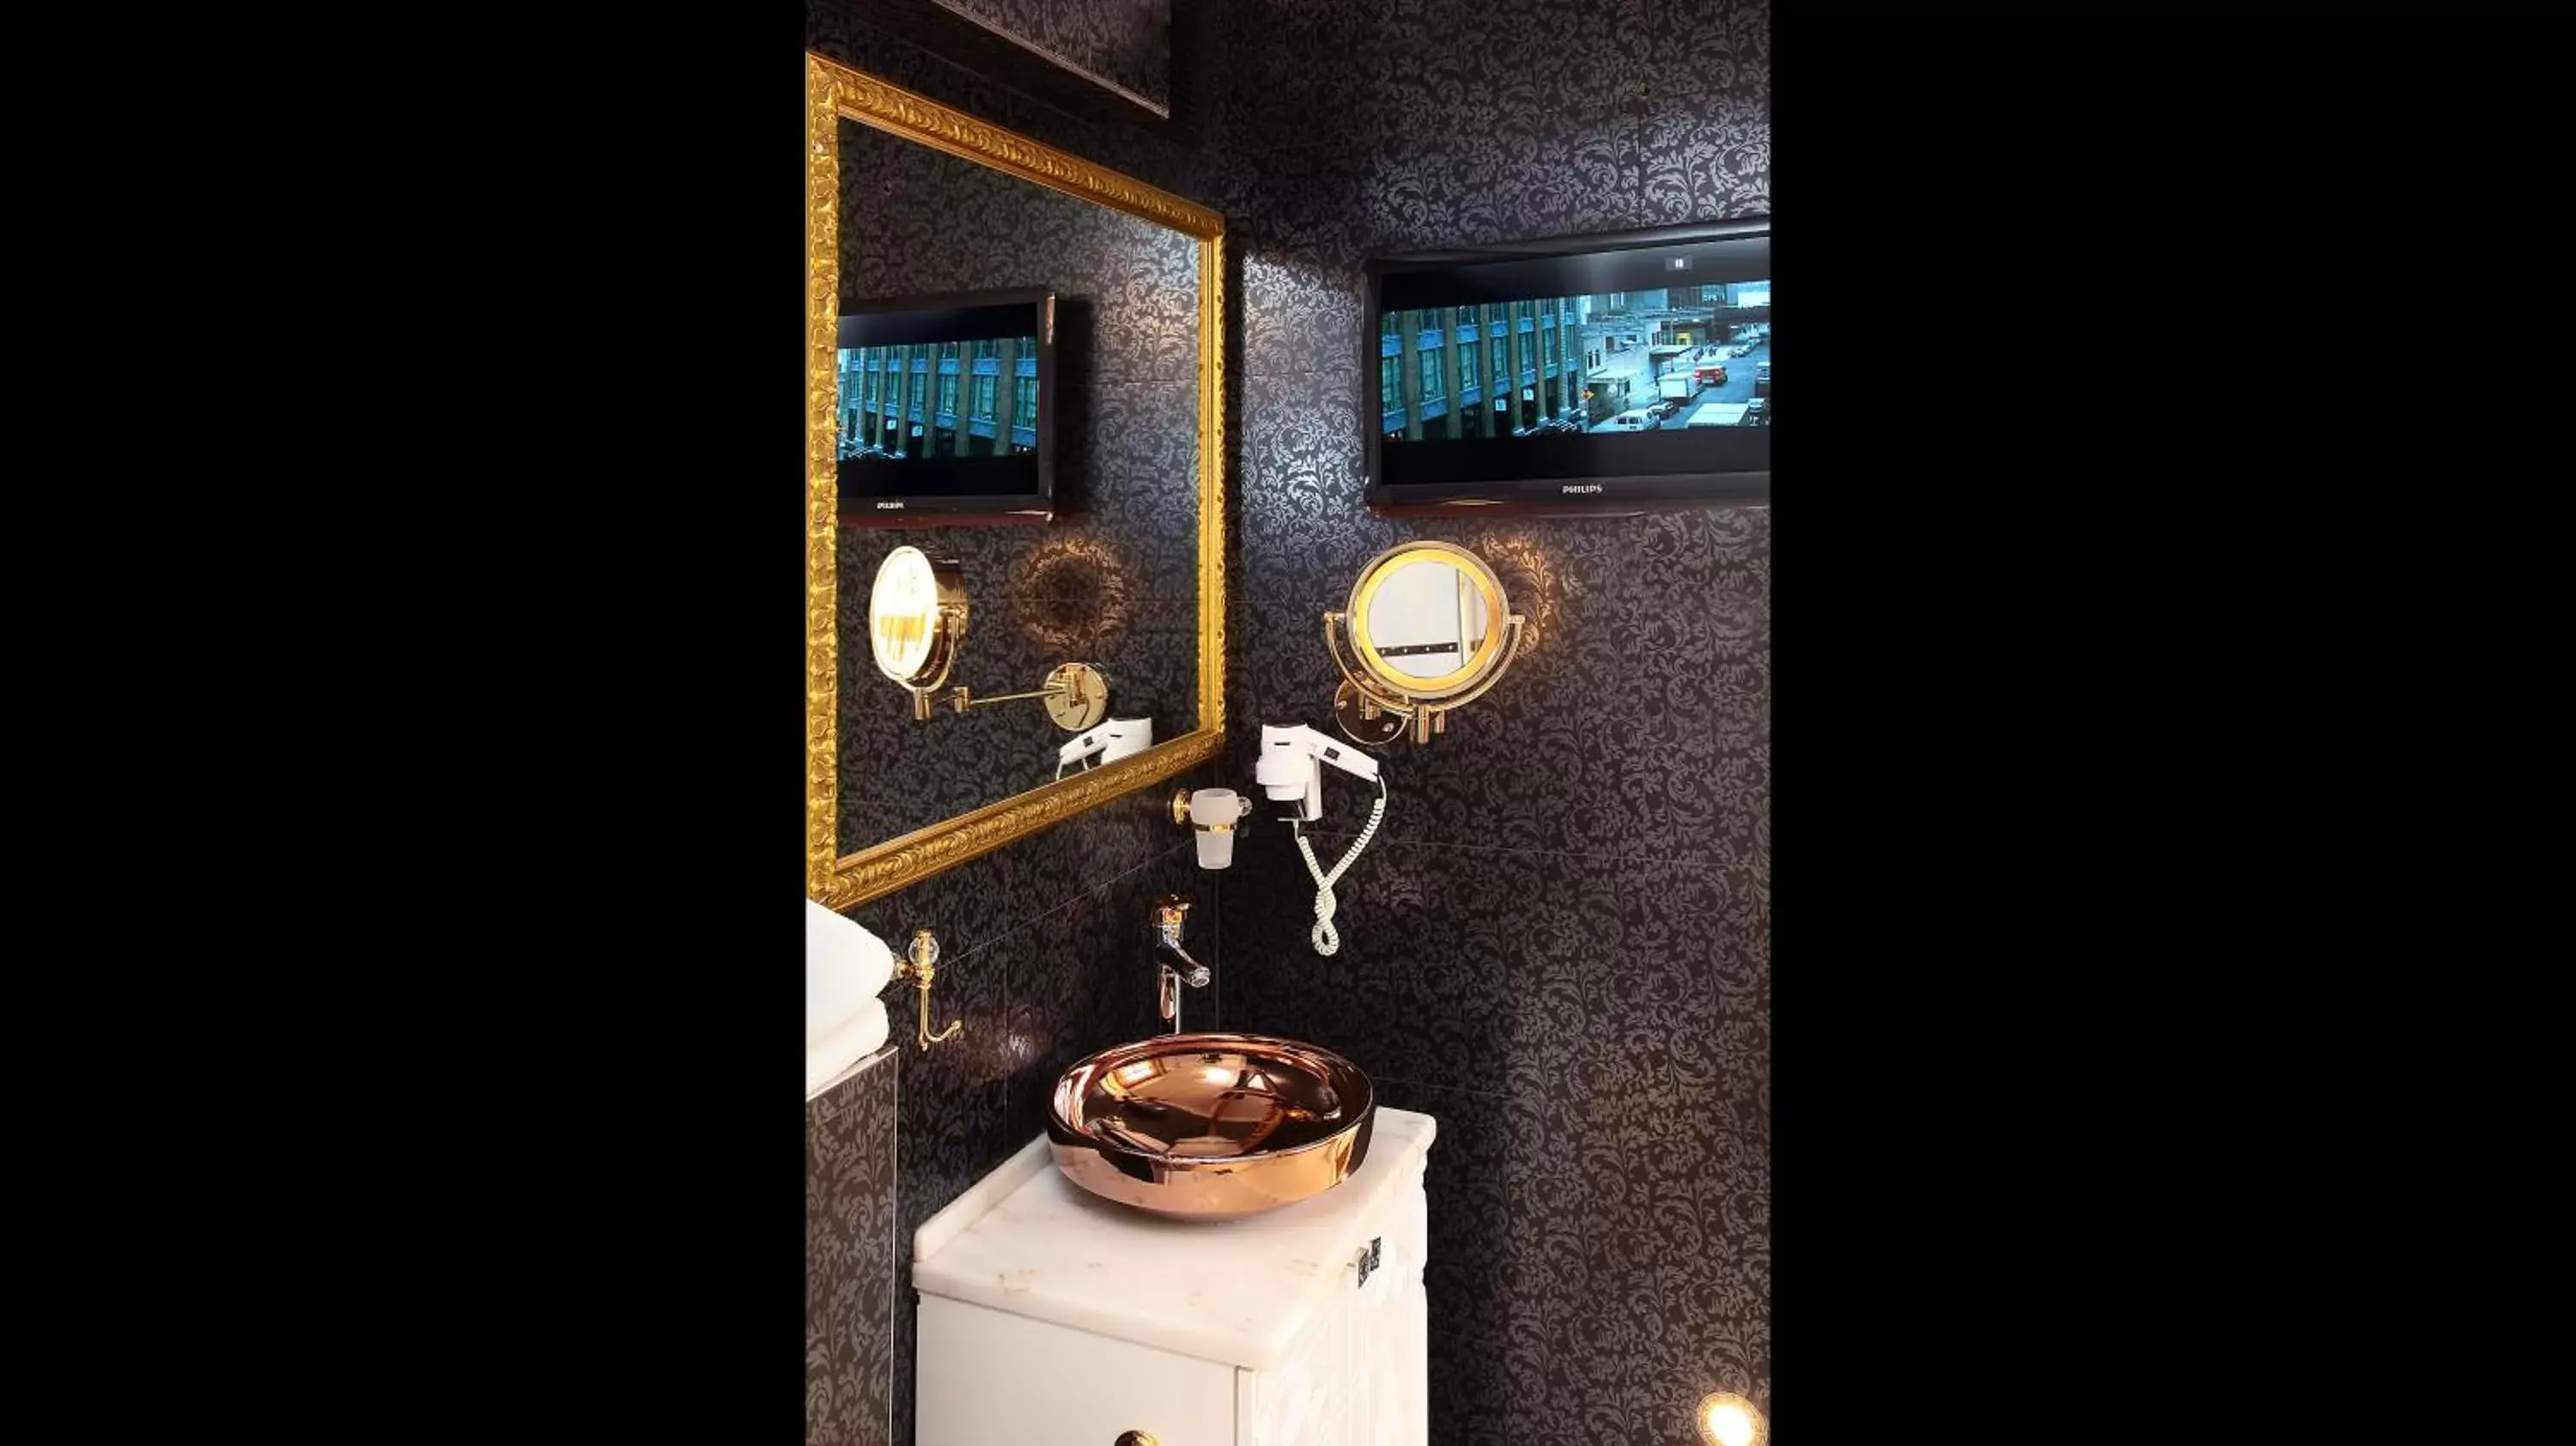 Decorative detail, Bathroom in Sultan Tughra Hotel